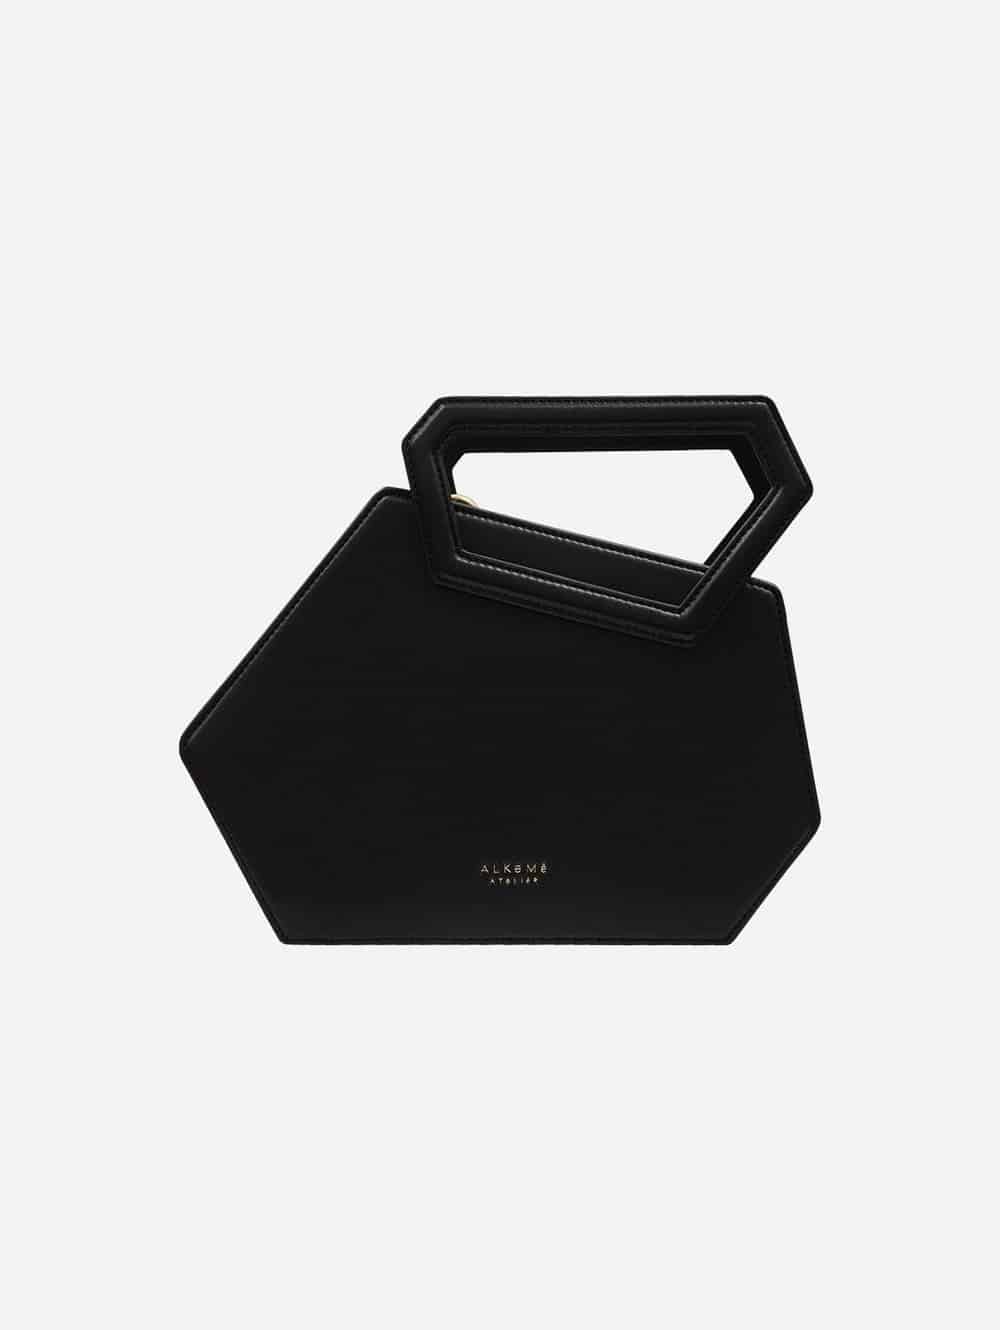 Black vegan leather hexagonal shaped satchel from Alkeme Atelier